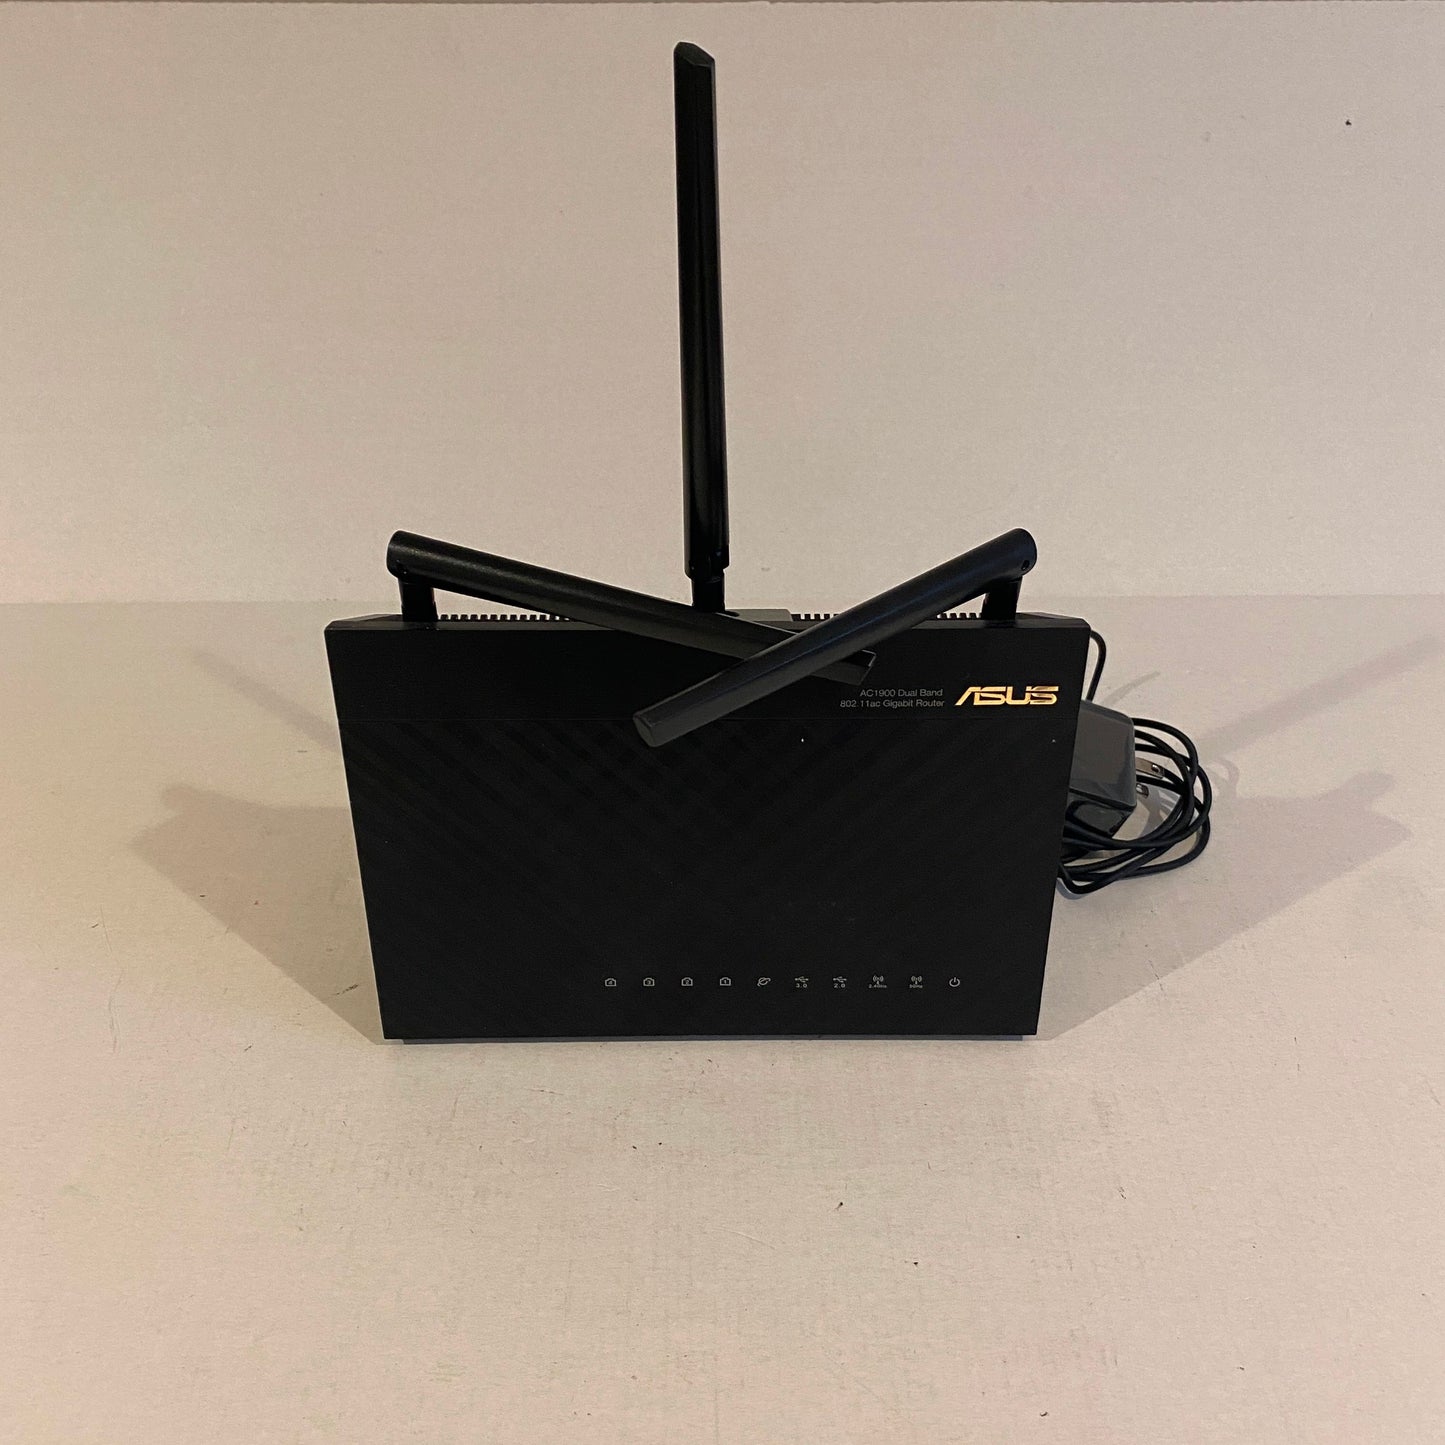 Asus AC-1900 Dual Band Gigabit Wireless Router - RT-AC68U